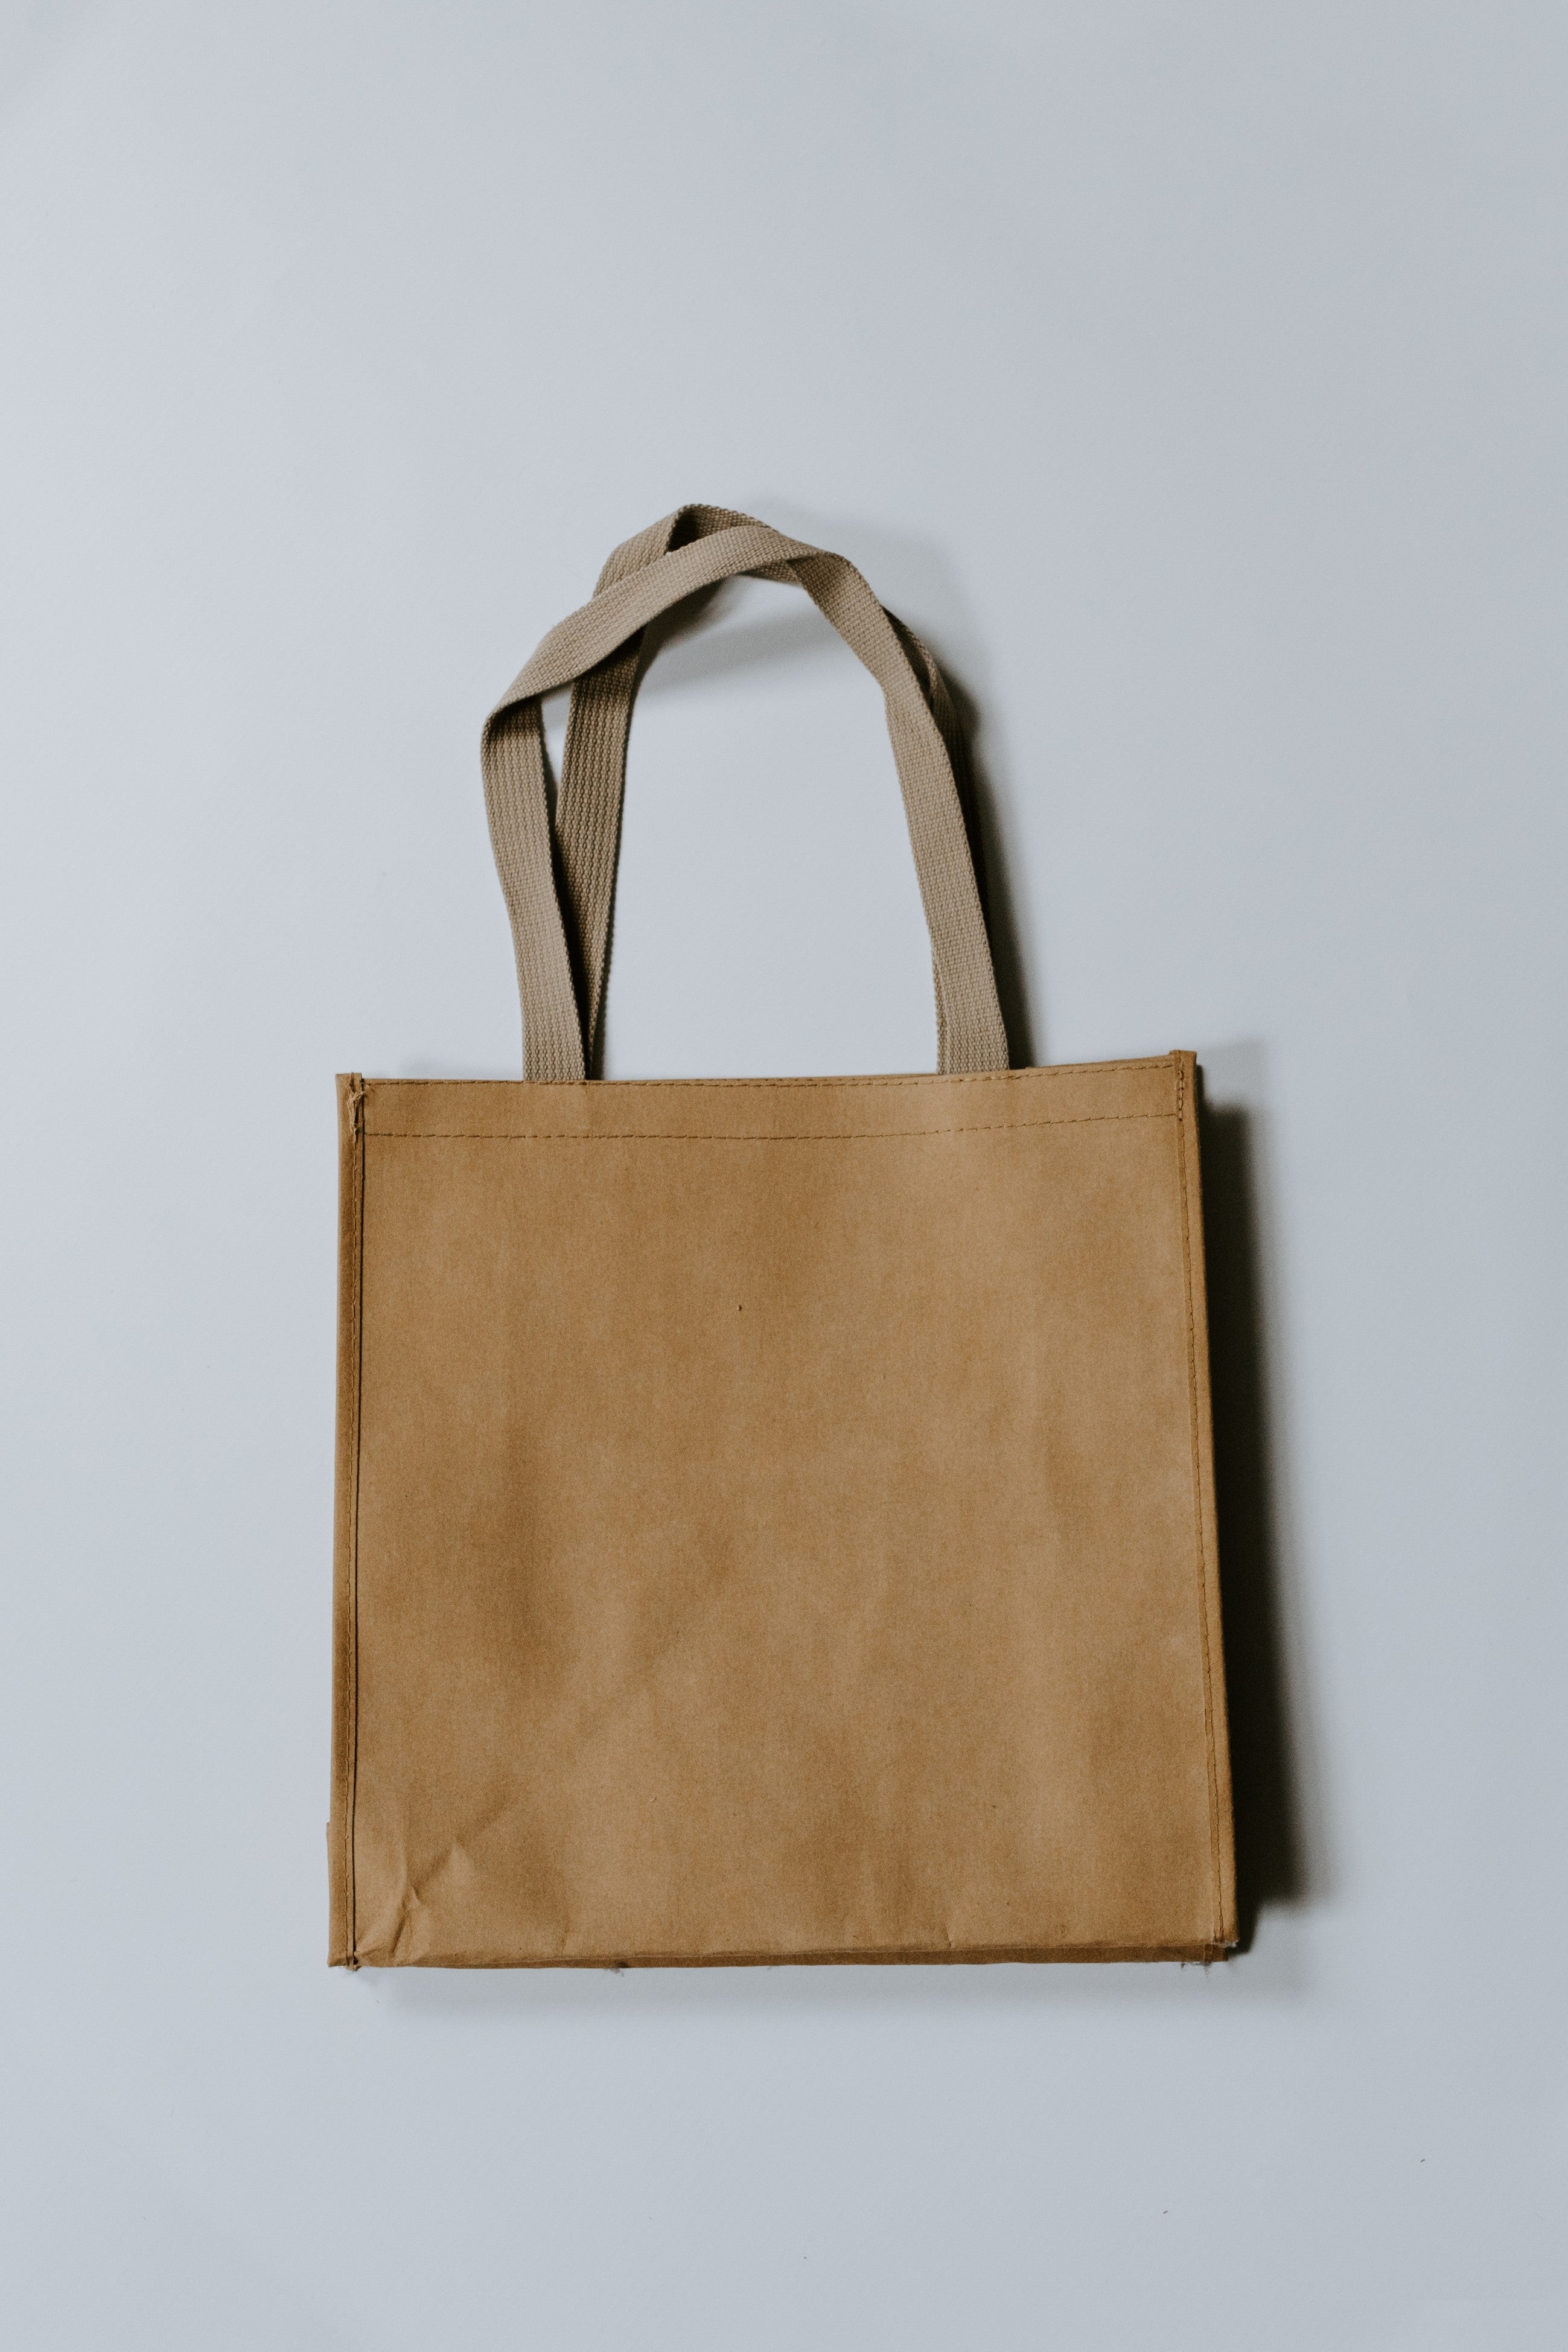 Eco-friendly Cotton Shopping Bags